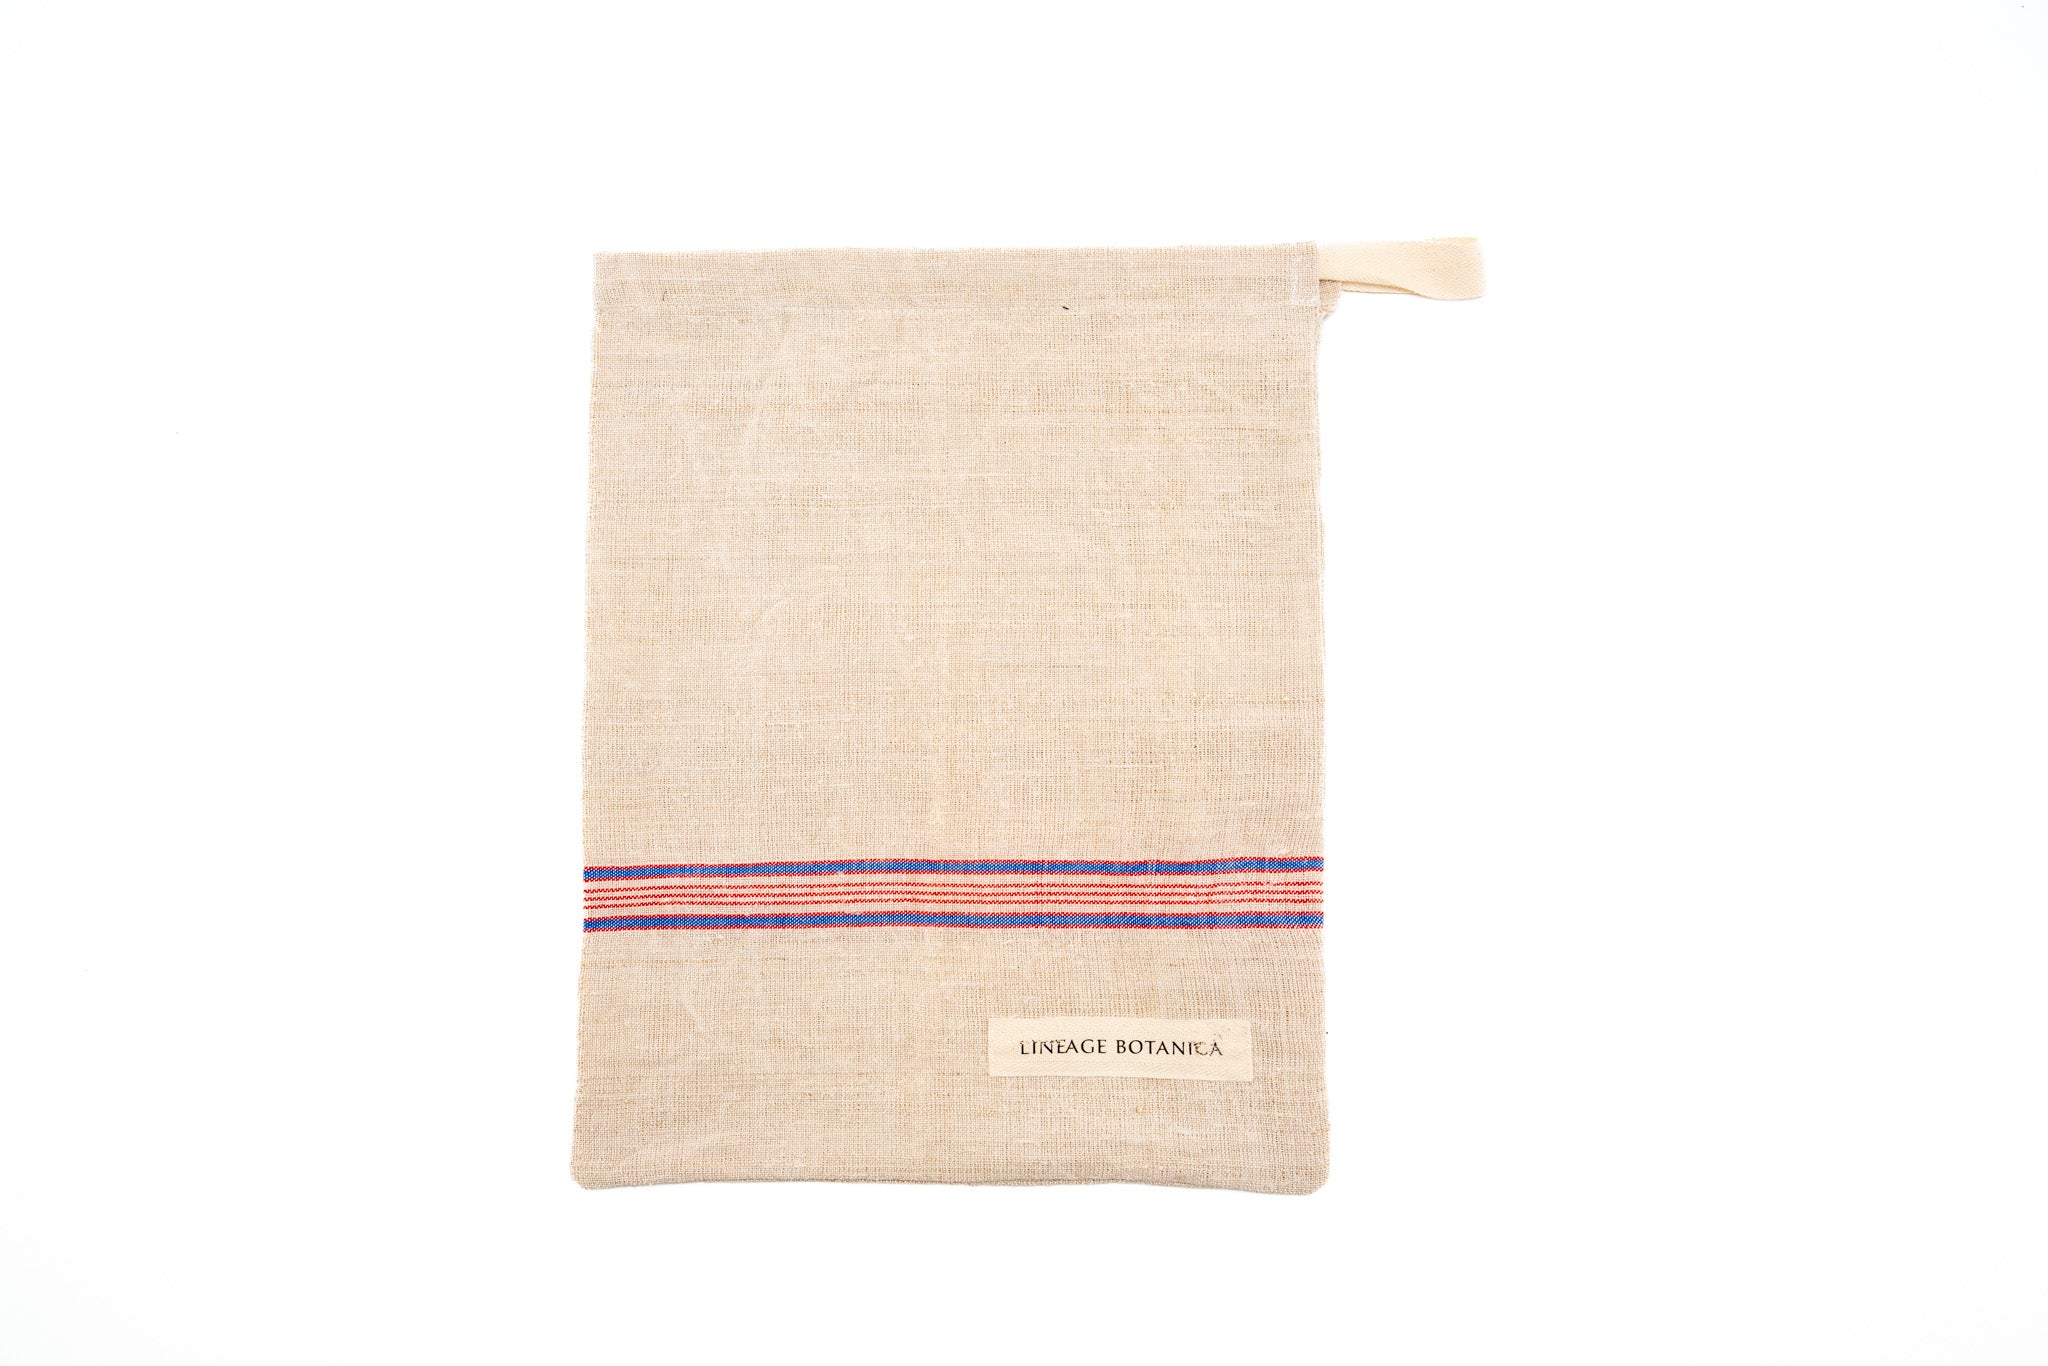 Bag: Handwoven antique and vintage hemp bread bags- BG226